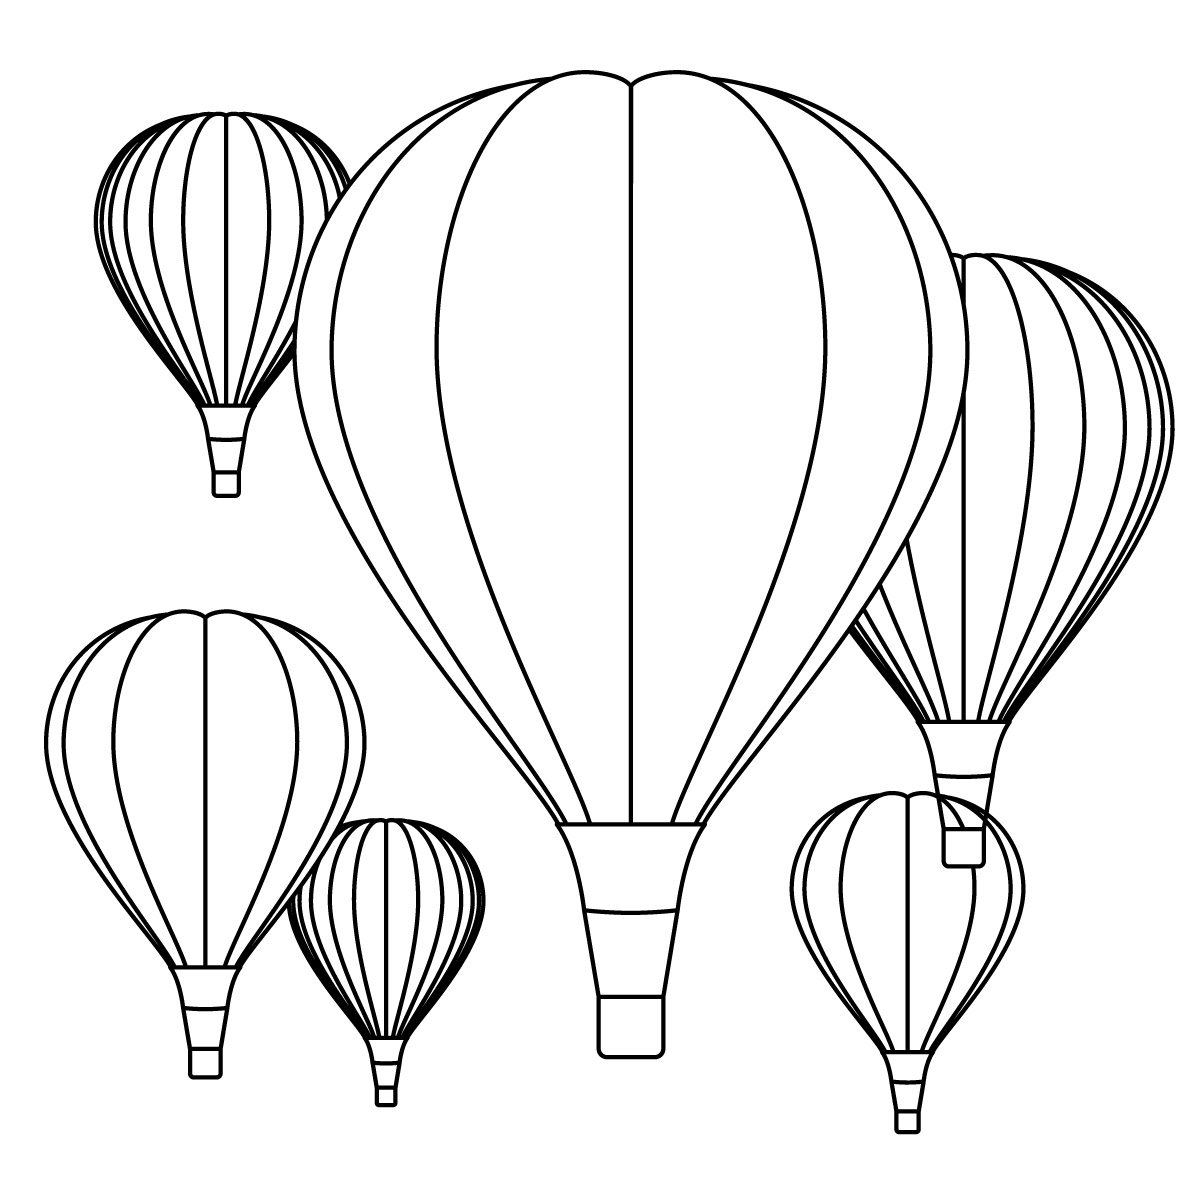 Hot Air Balloon Template Printable